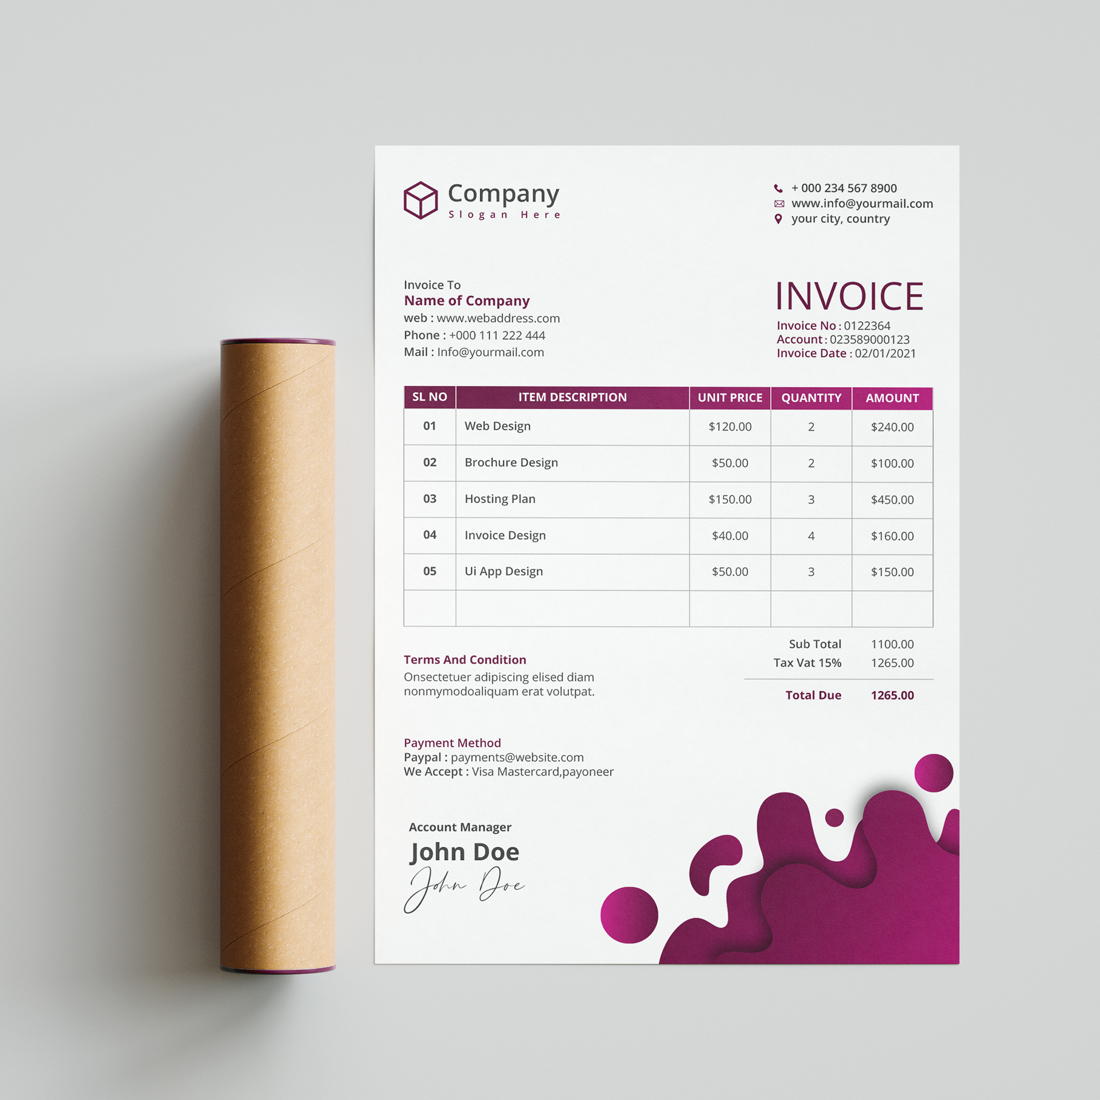 Invoice Design Template Bundle preview image.